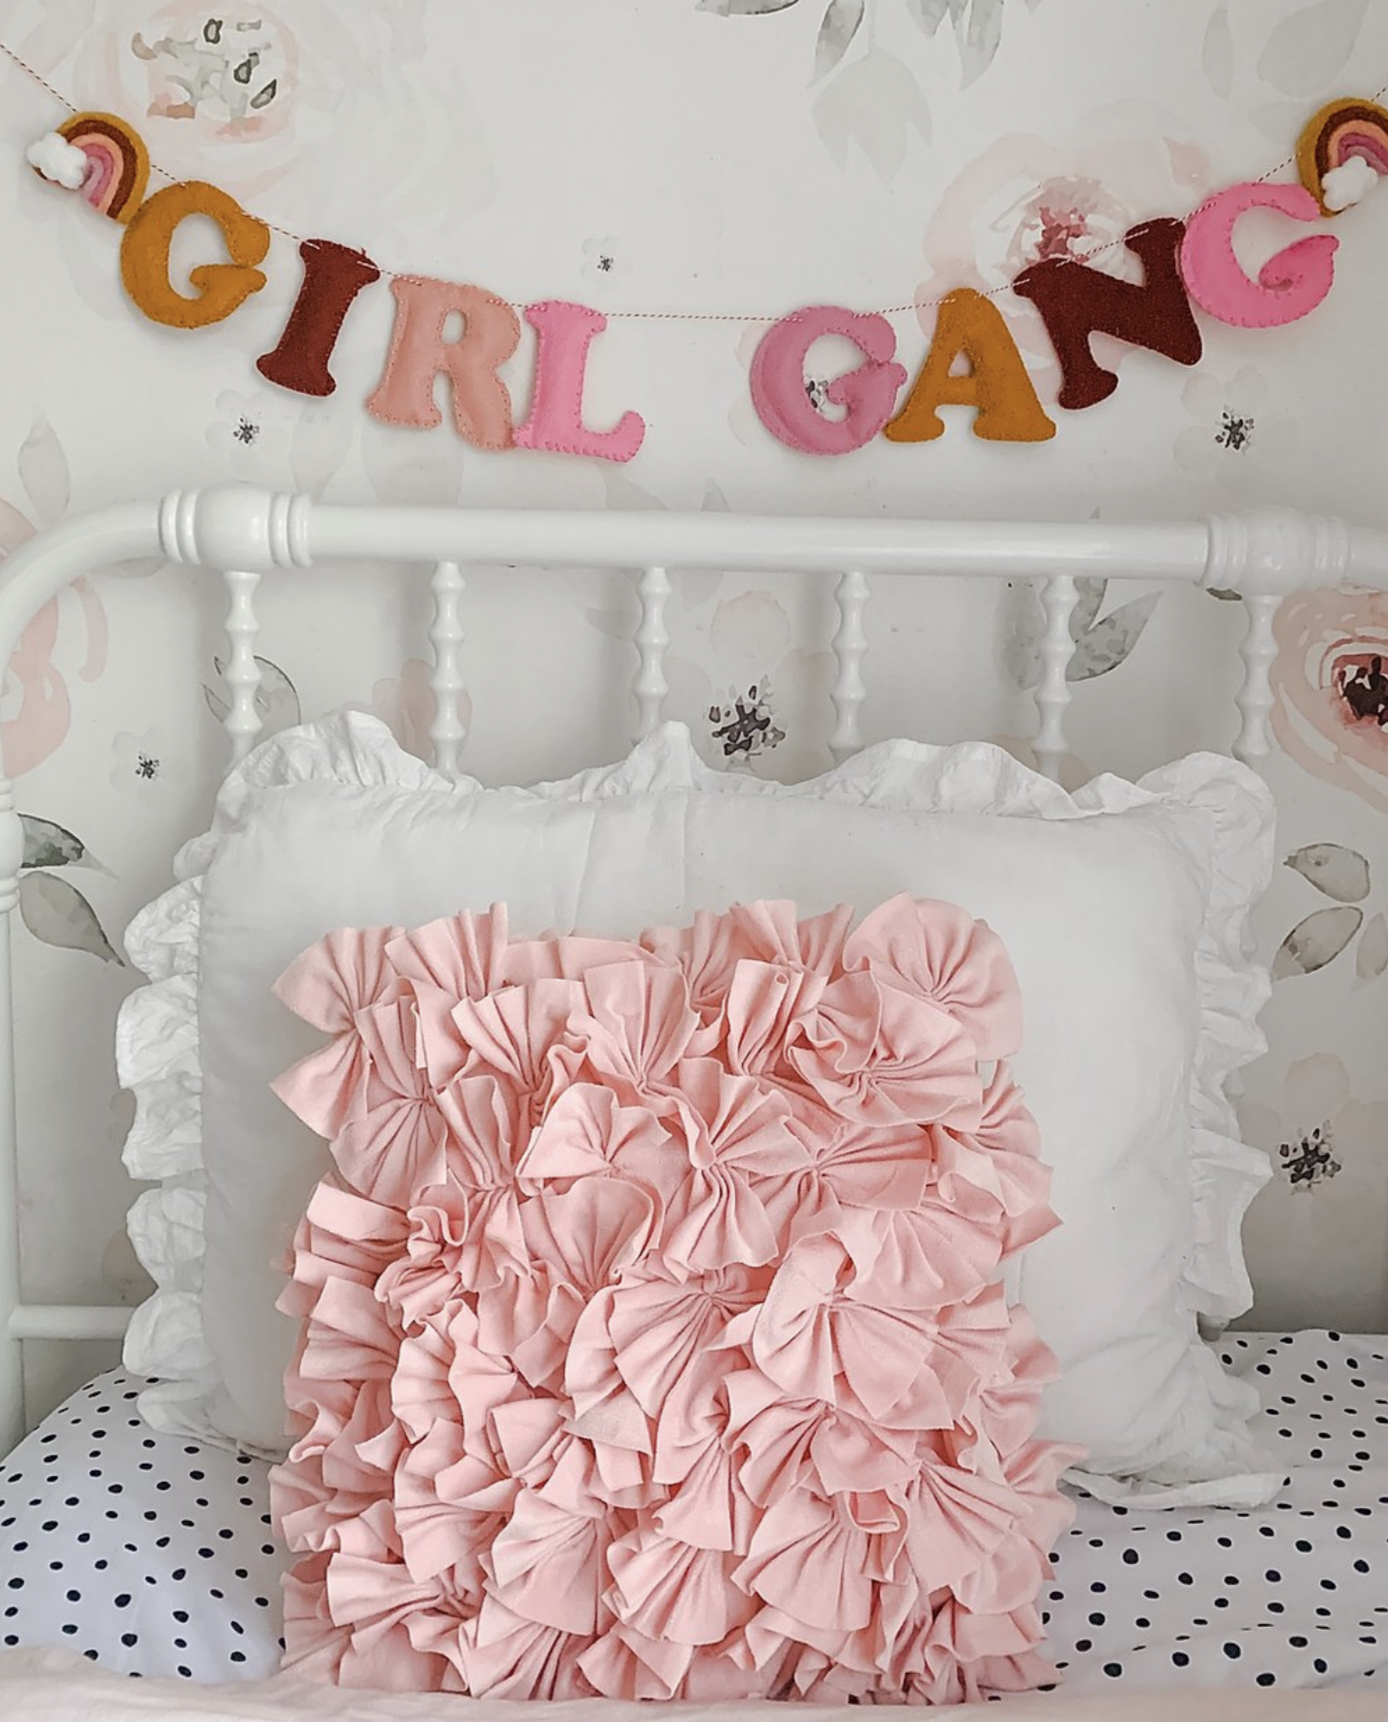 The Daily Yay Felt Garland Girl Gang - Girls Room